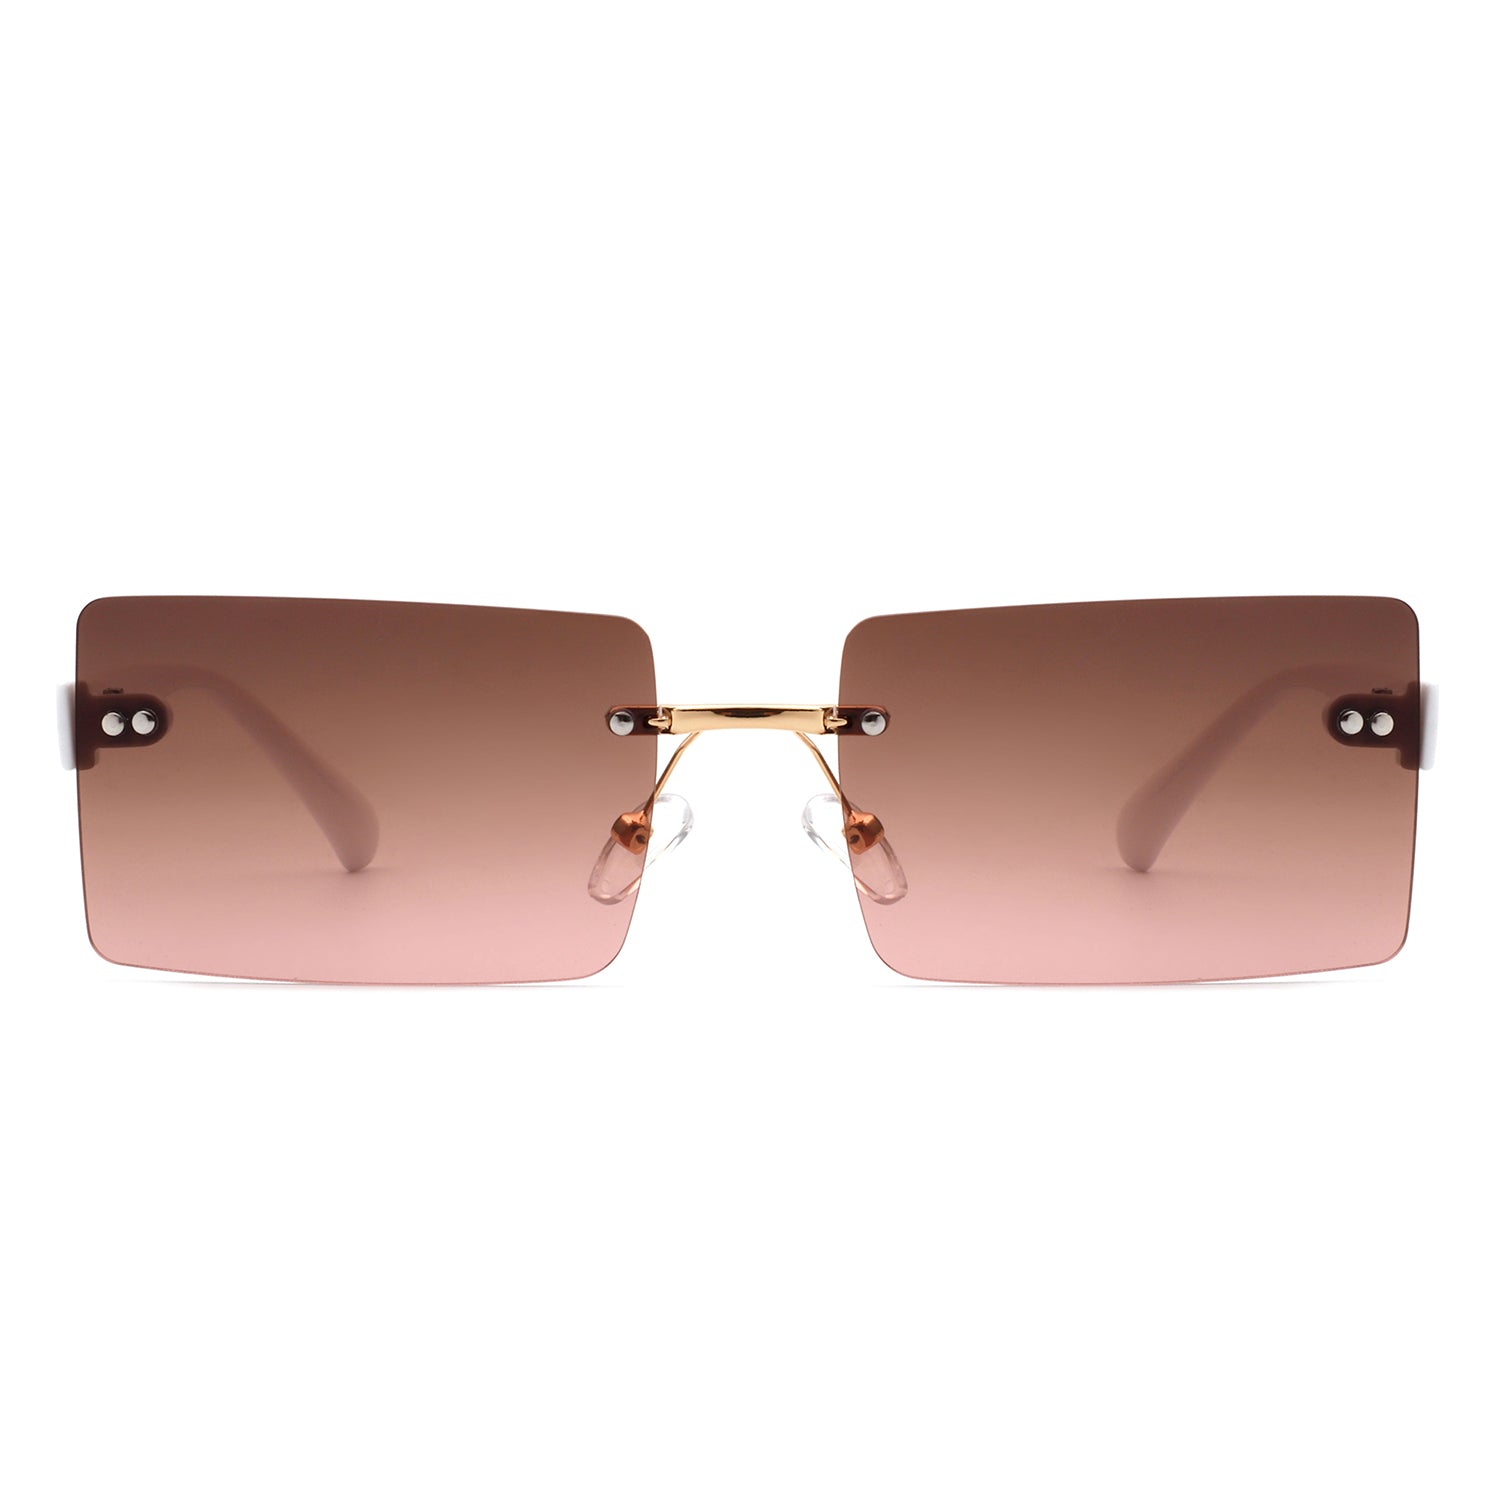 Jadesoul - Rectangle Retro Rimless Tinted Fashion Vintage Square Sunglasses Pink